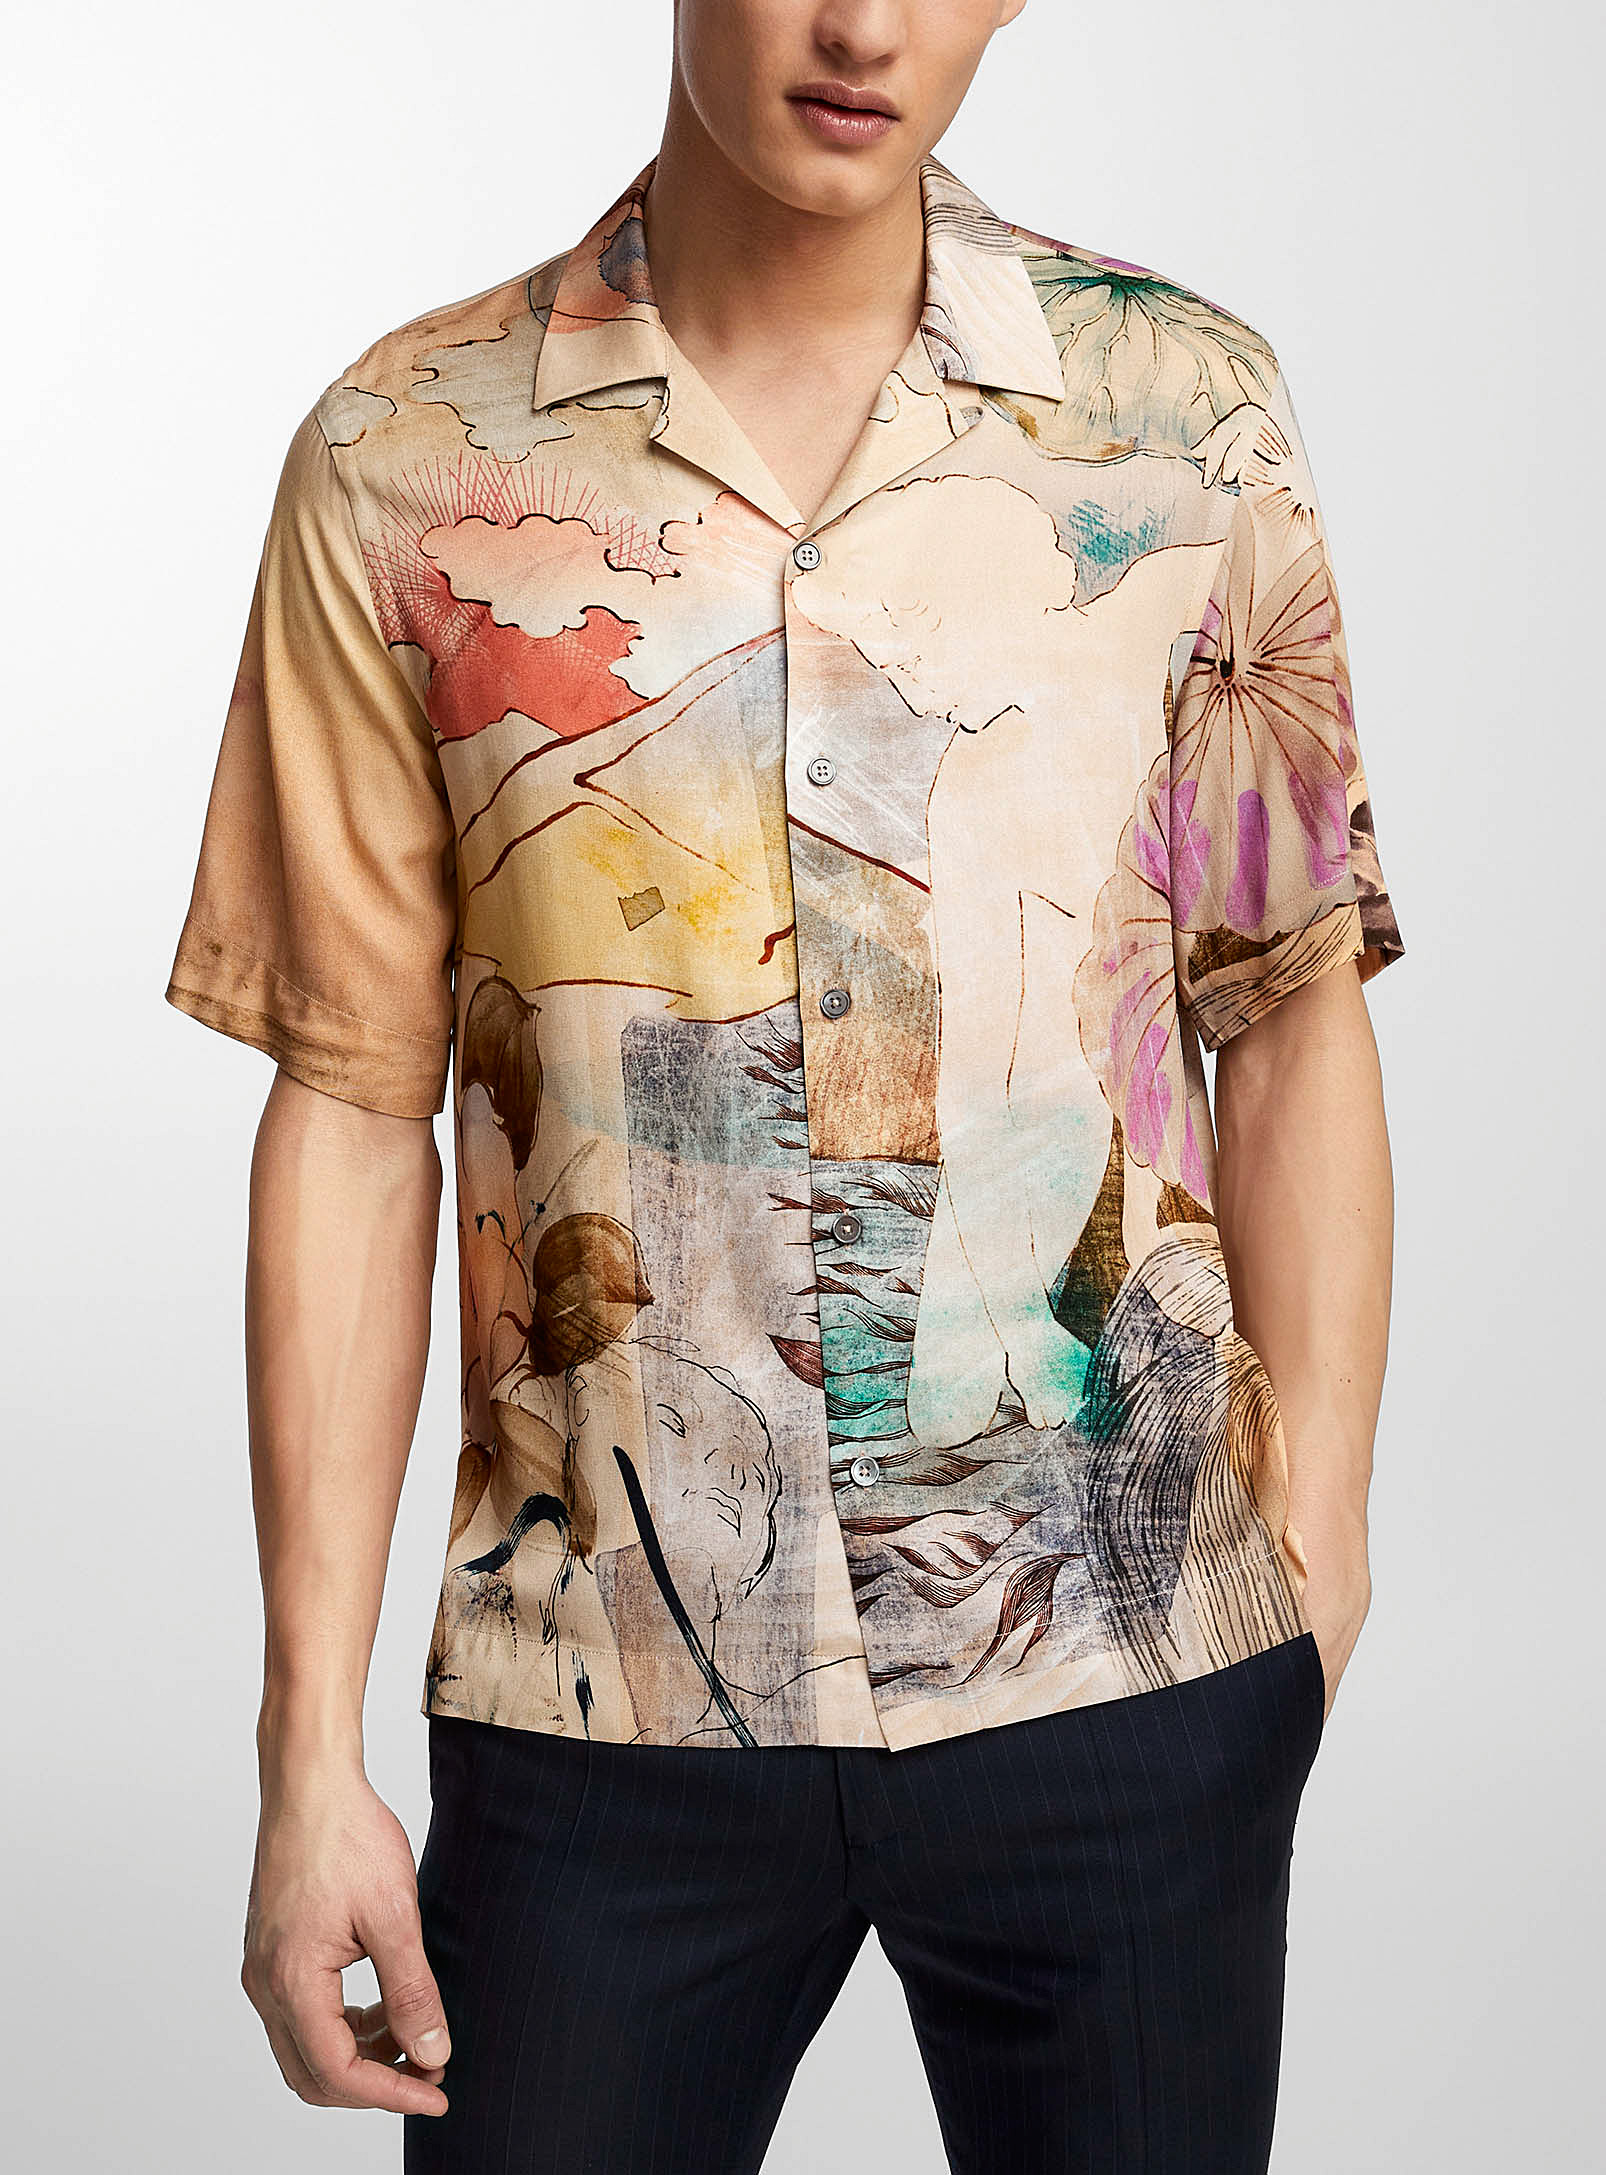 Paul Smith - Men's Watercolour painting shirt